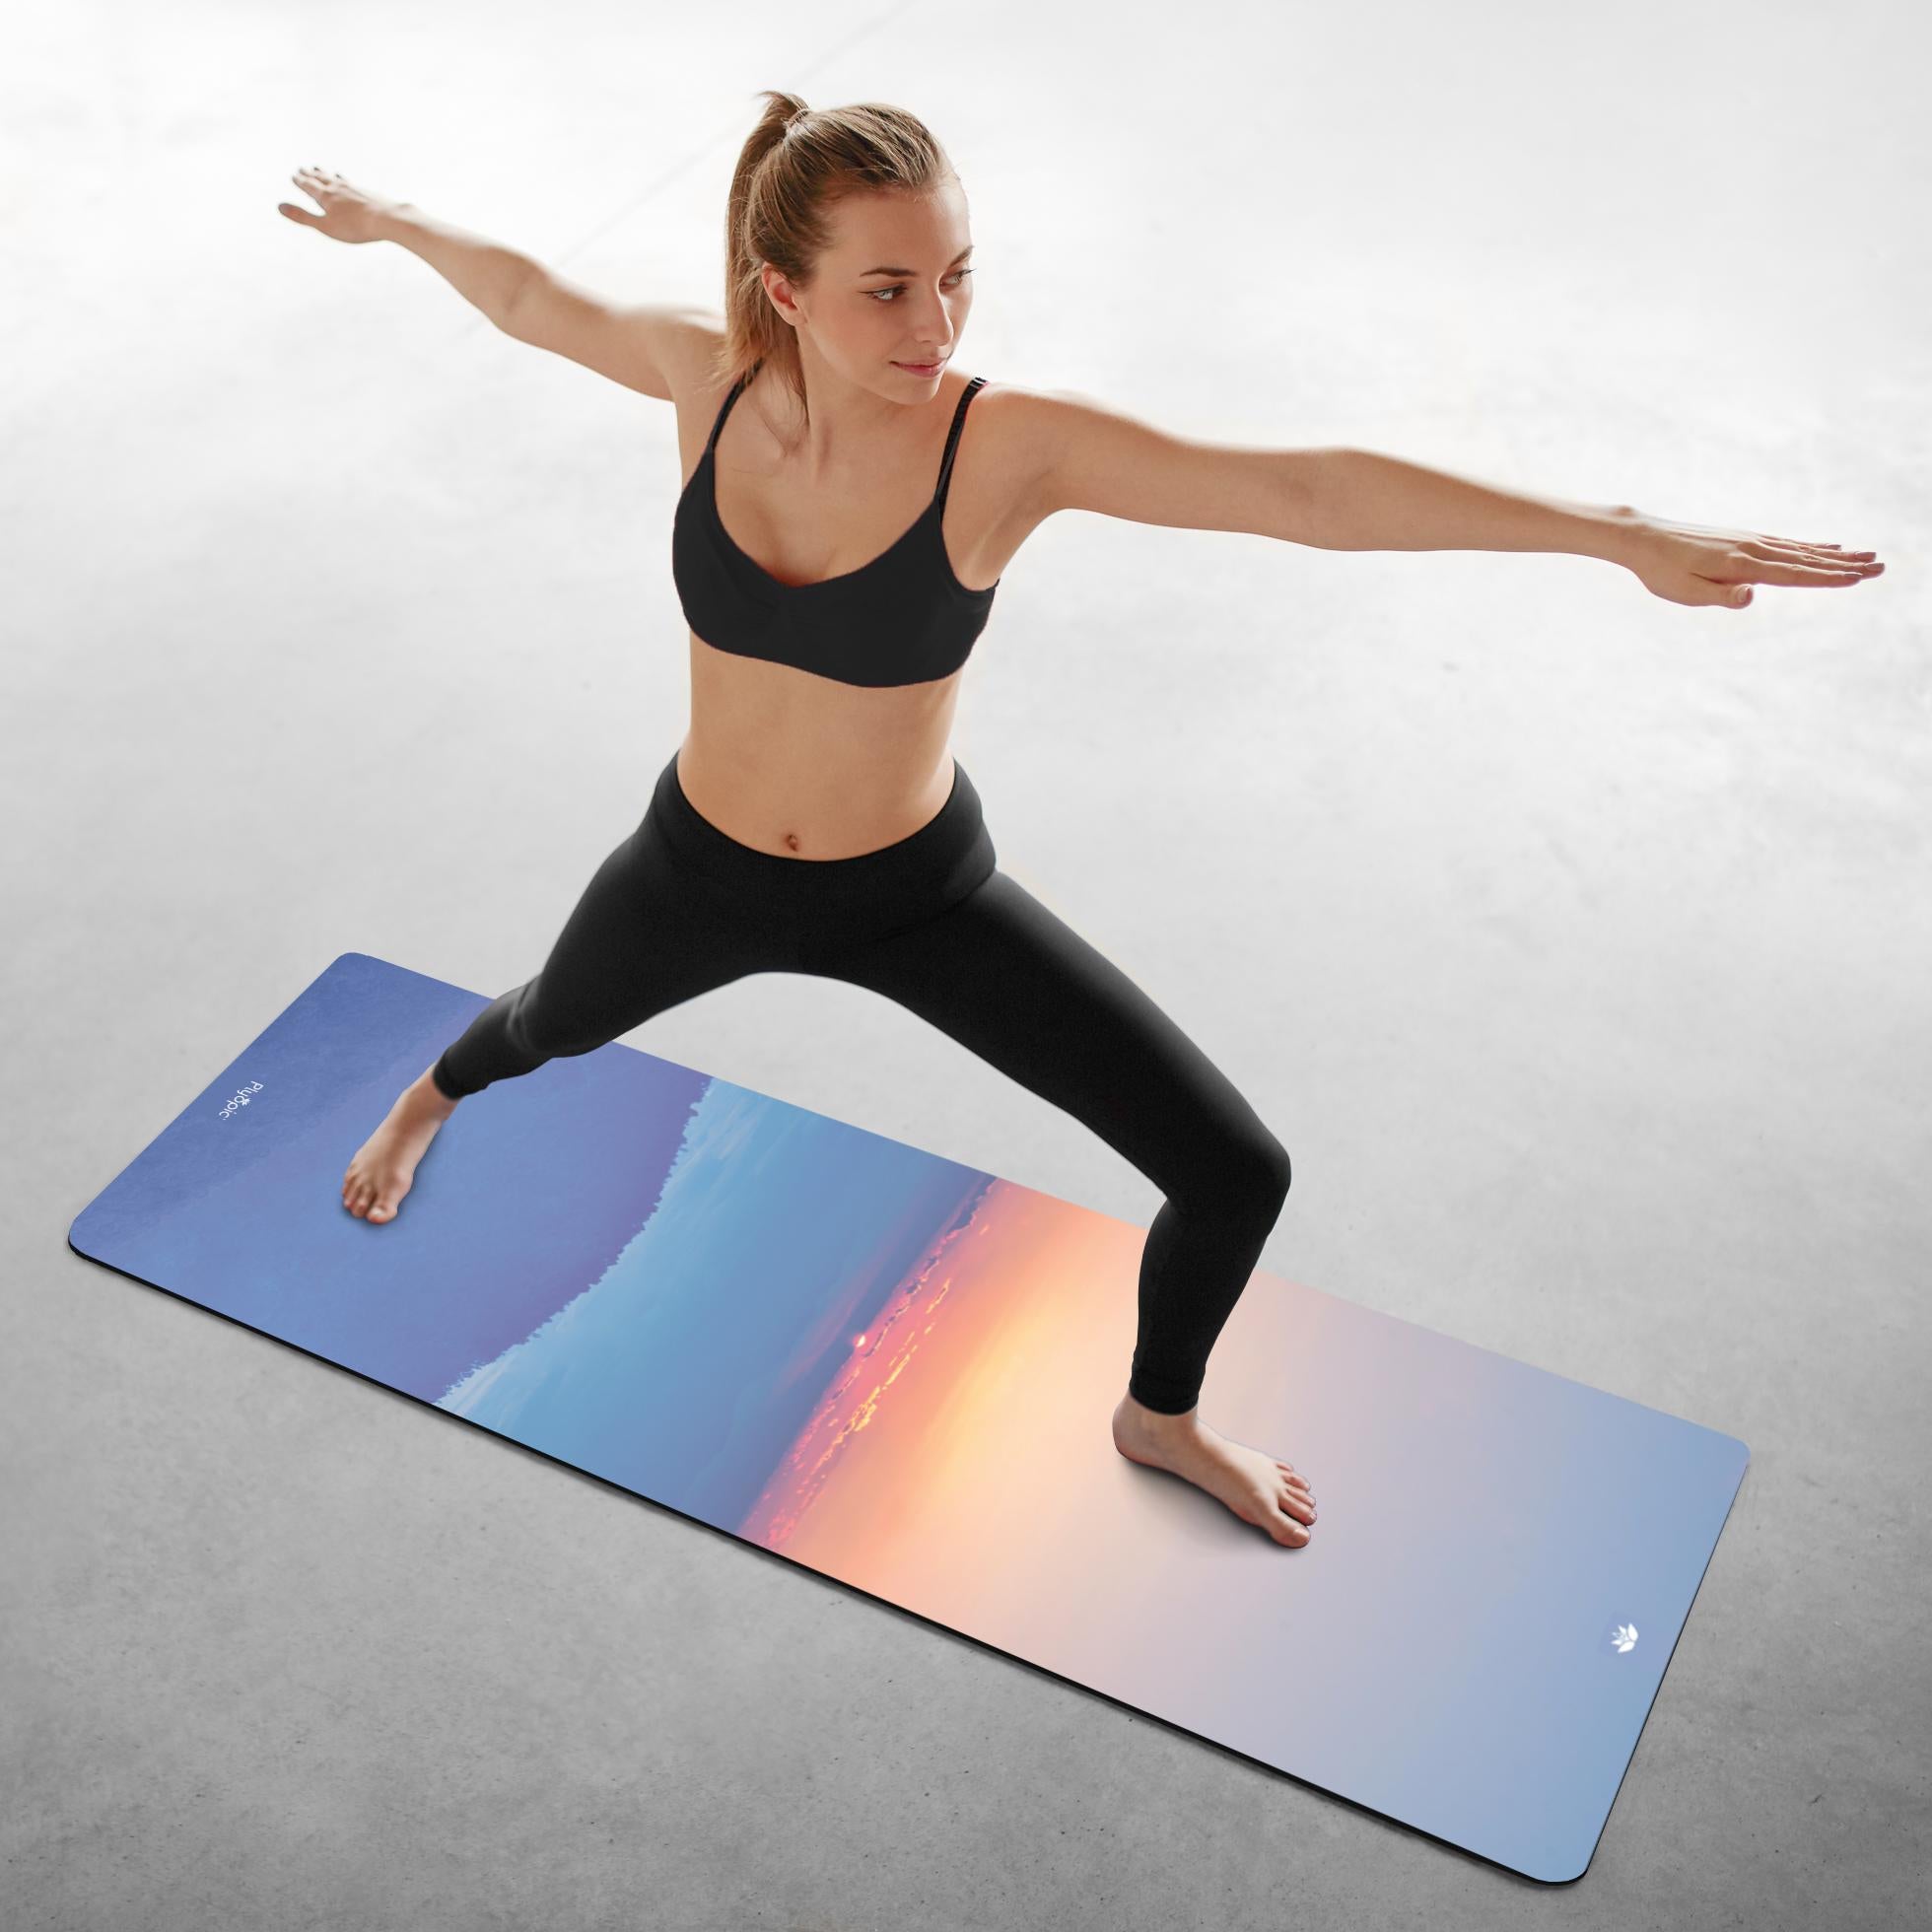 Plyopic-All In One Yoga Mat - Prana